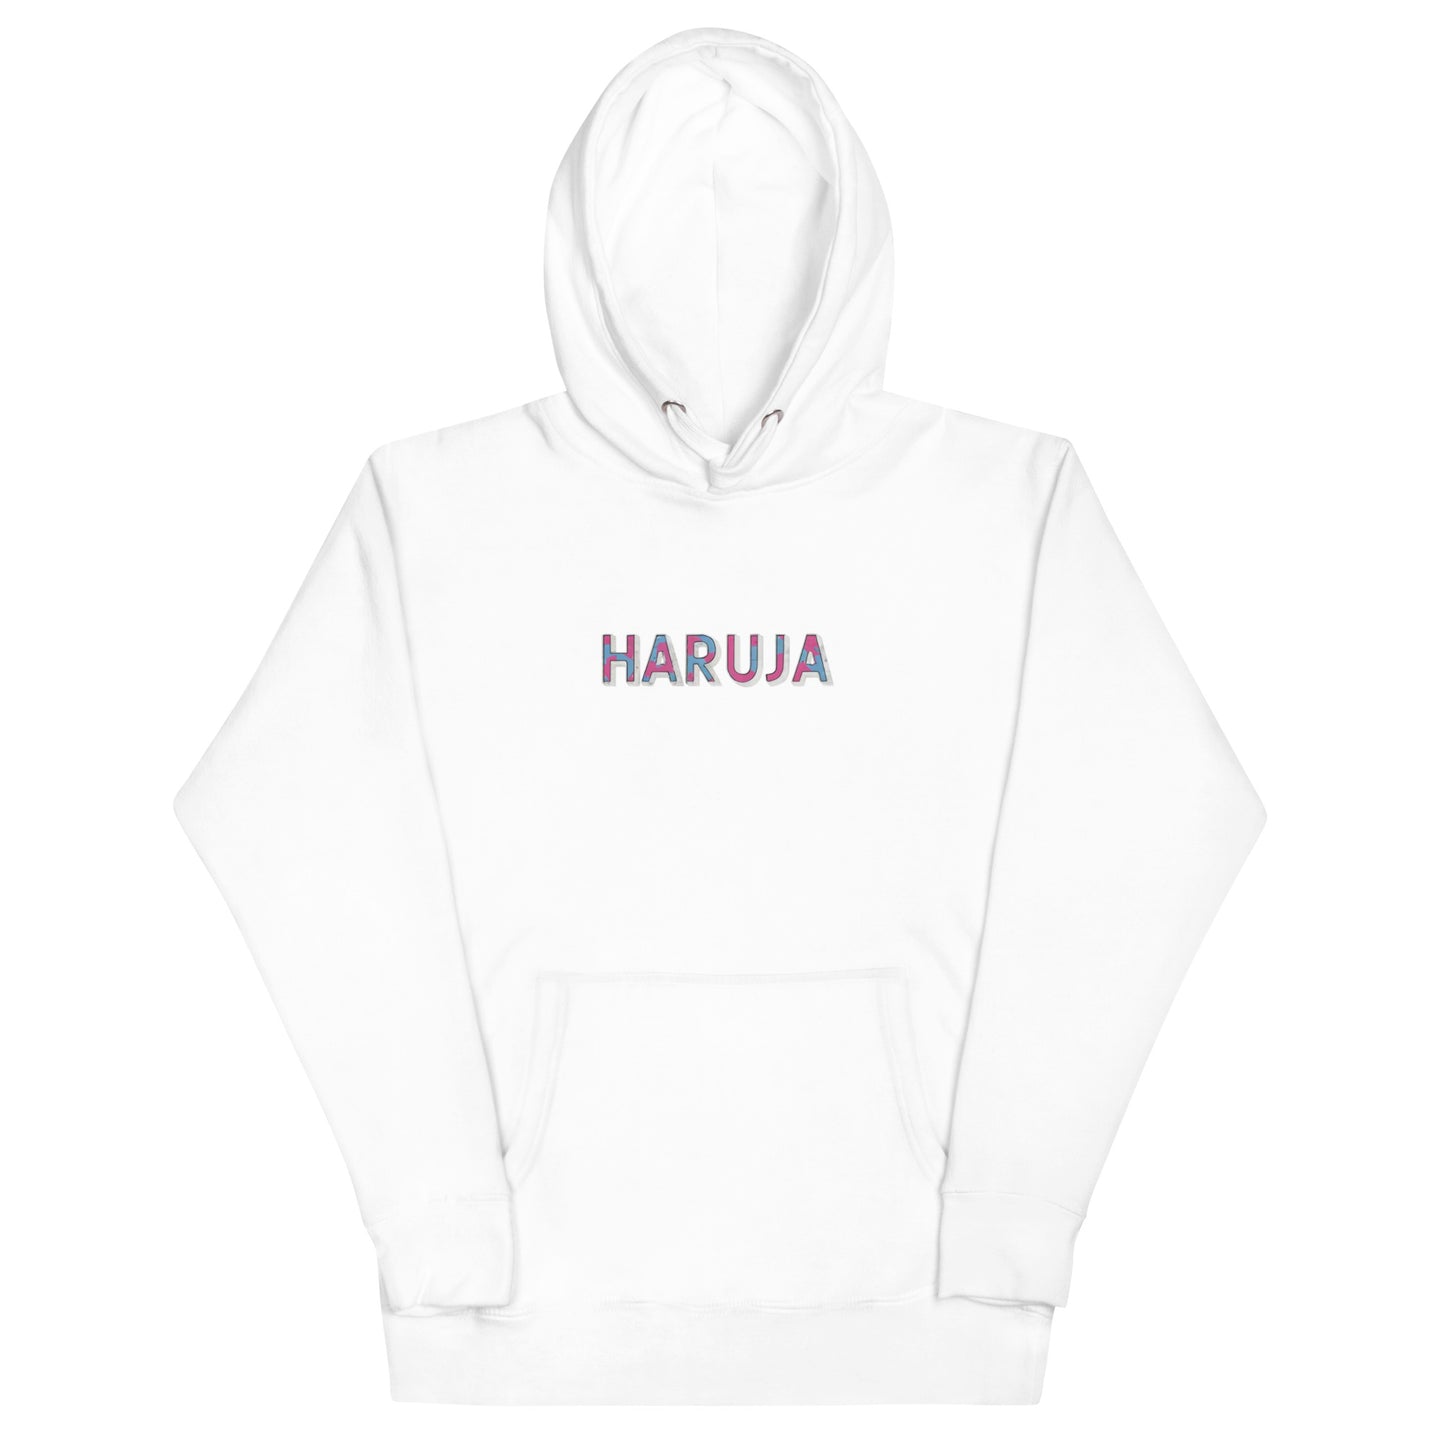 Haruja - New Nebula Hoodie